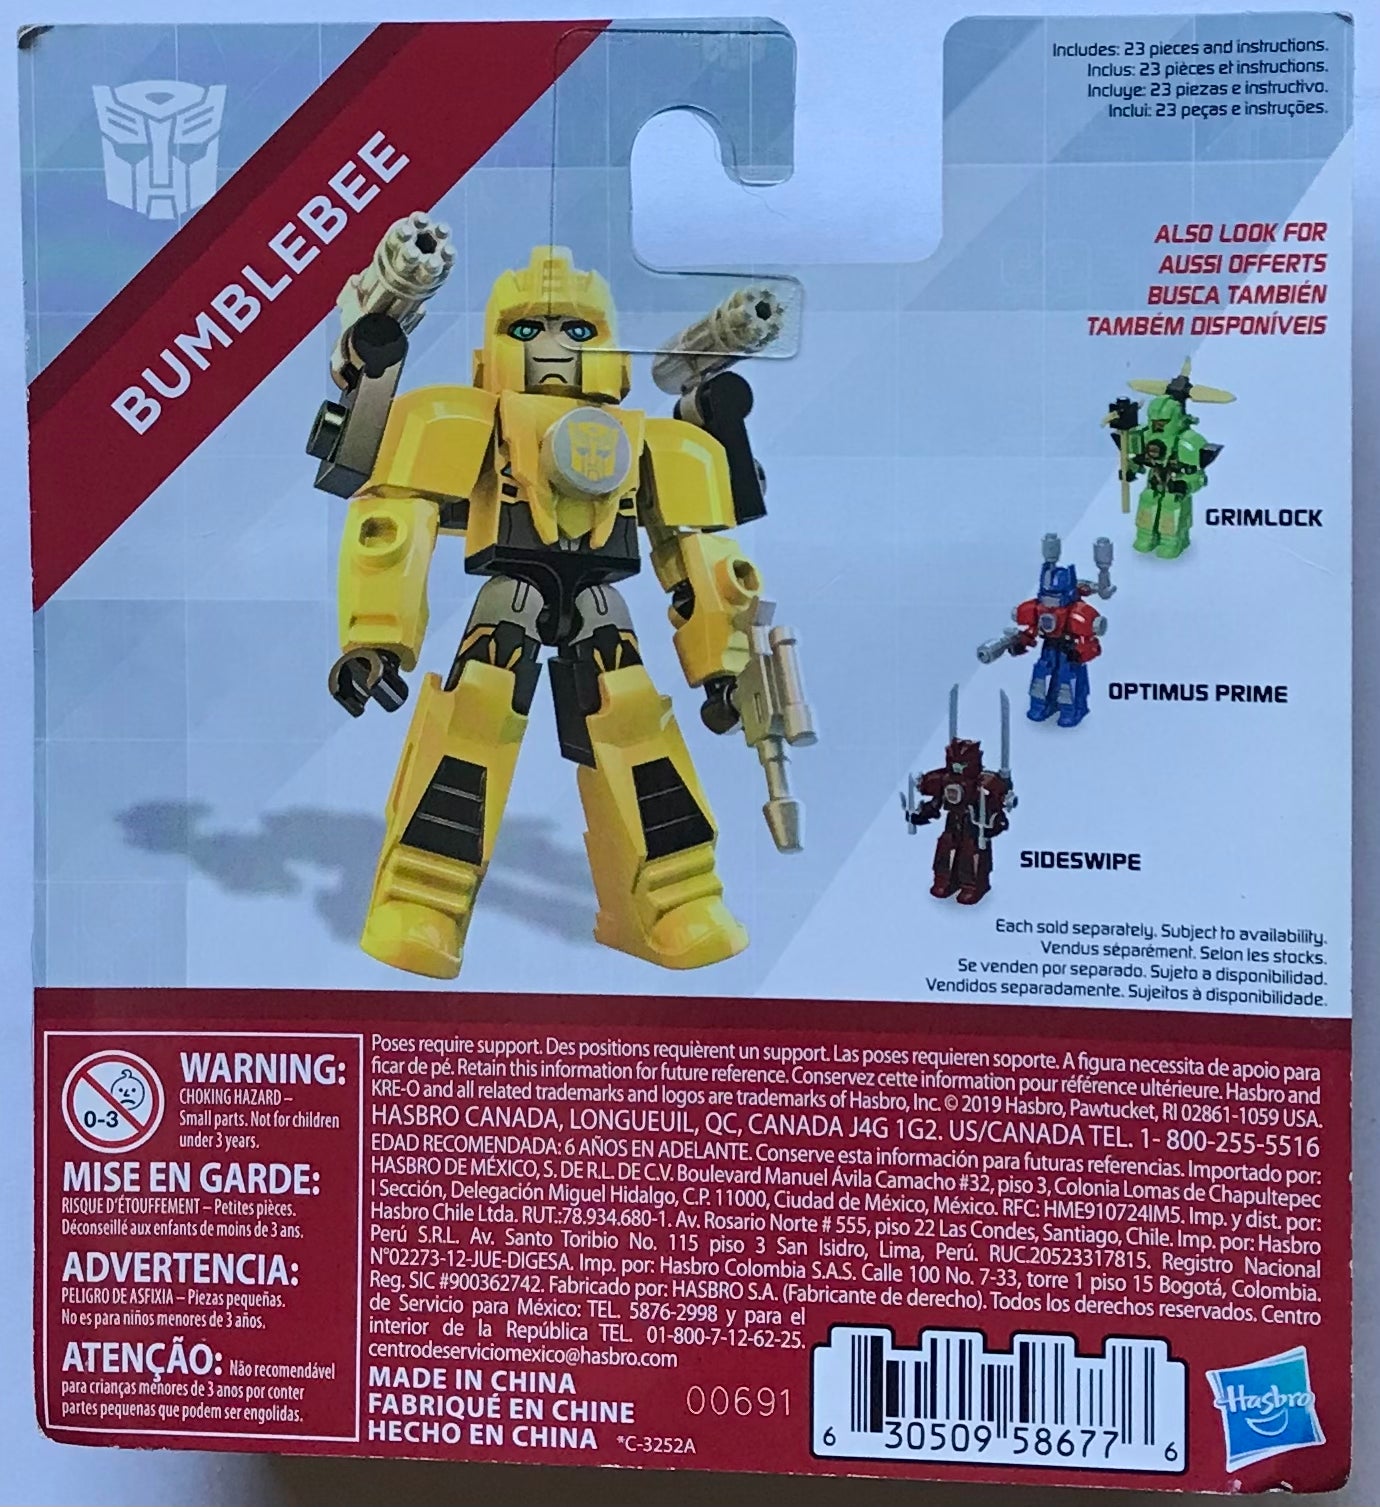 Kre-O Transformers Blizzard Strike Bumblebee Hasbro Building Toy